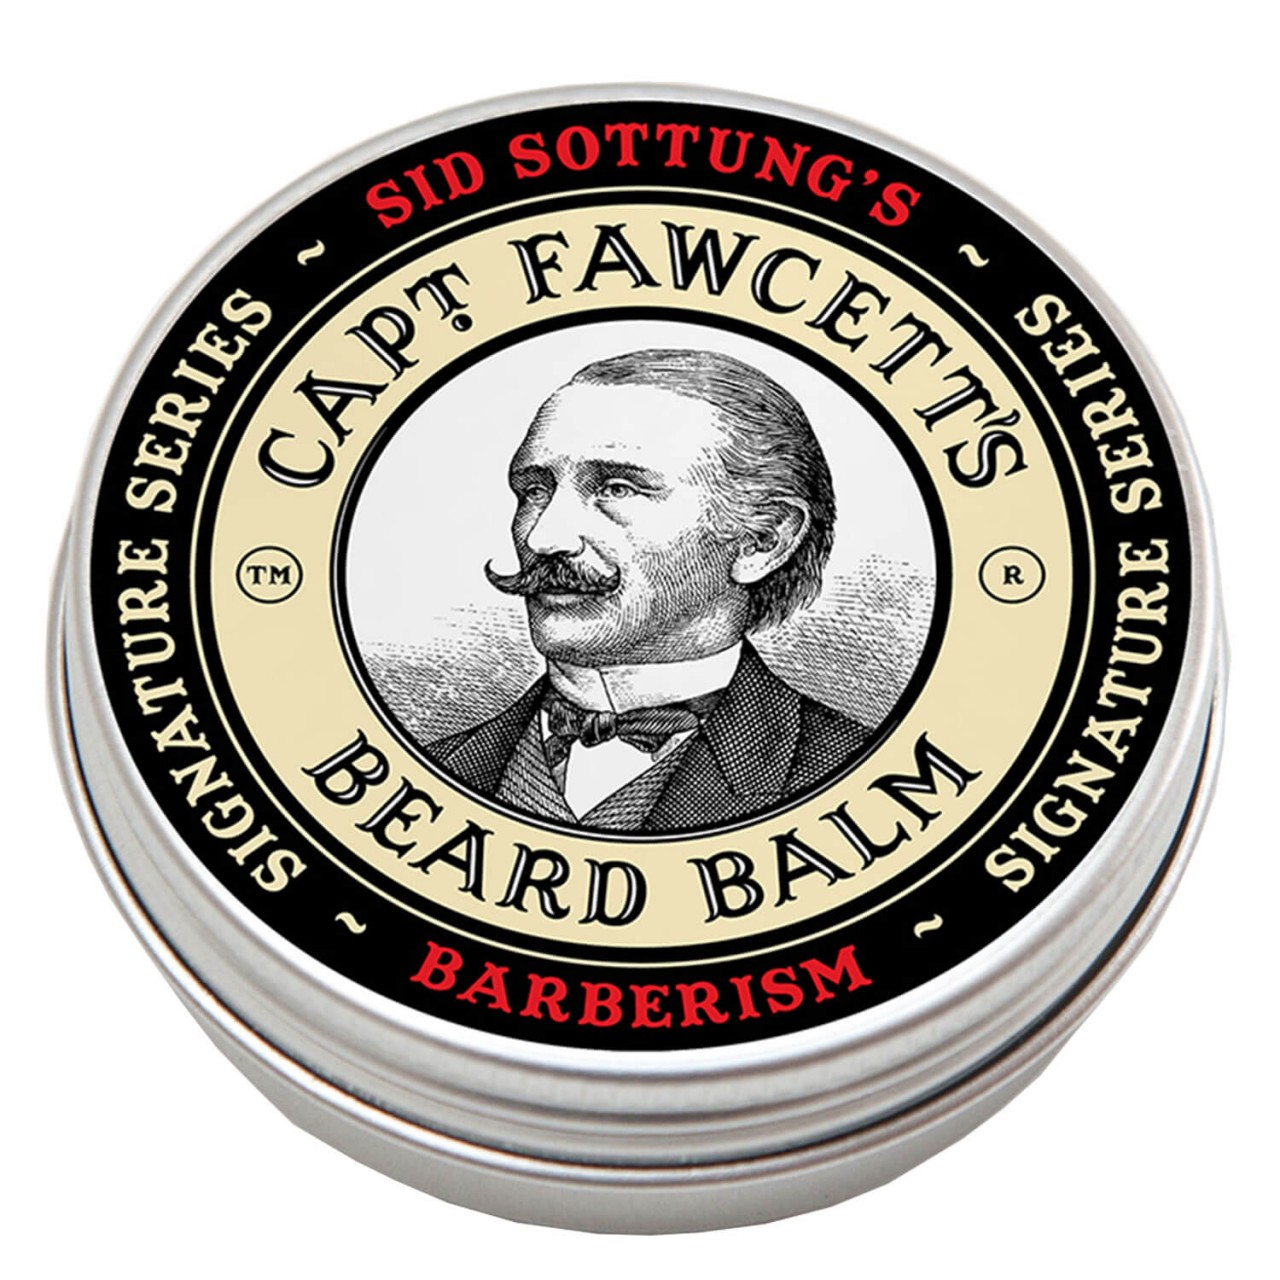 Capt. Fawcett Care - Sid Sottung's Barberism Beard Balm von Captain Fawcett